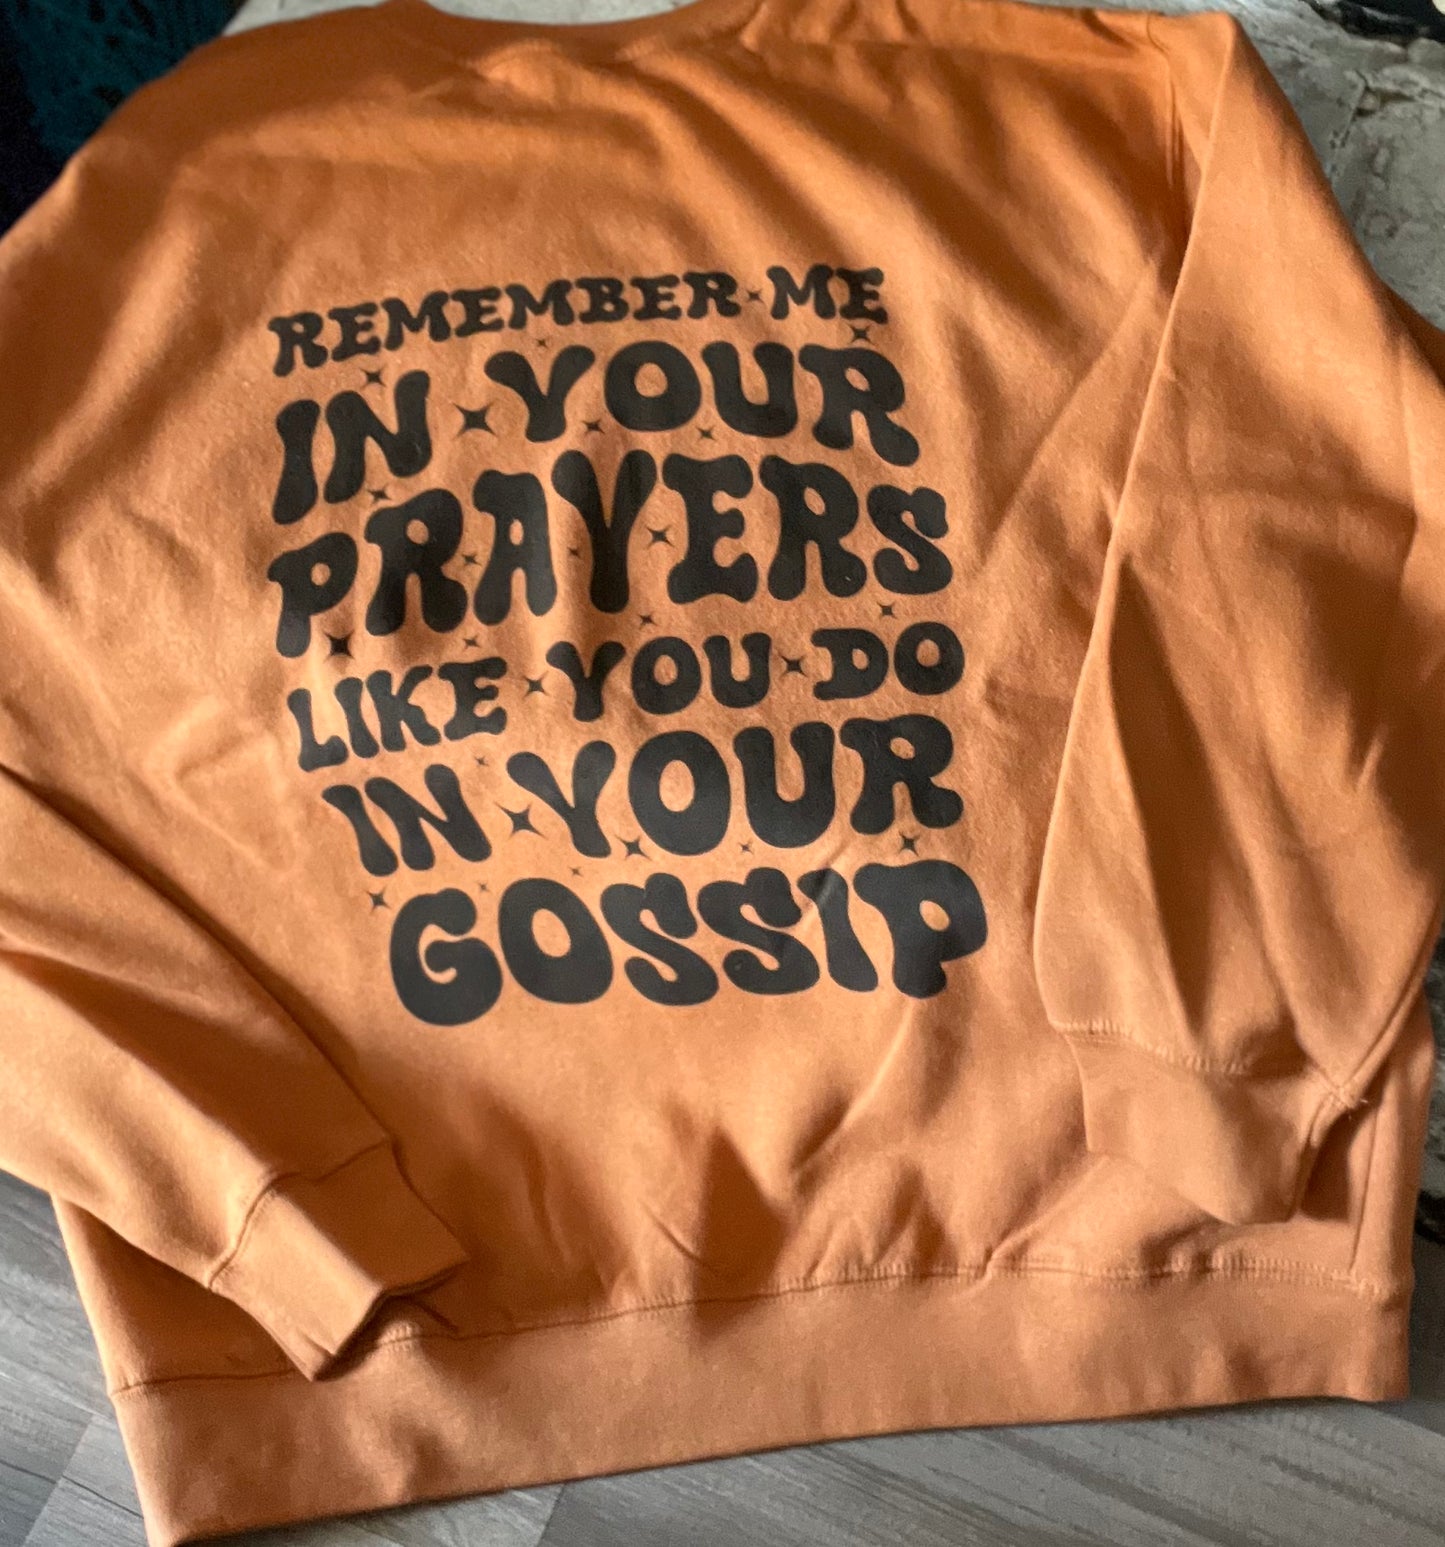 Prayers Over Gossip